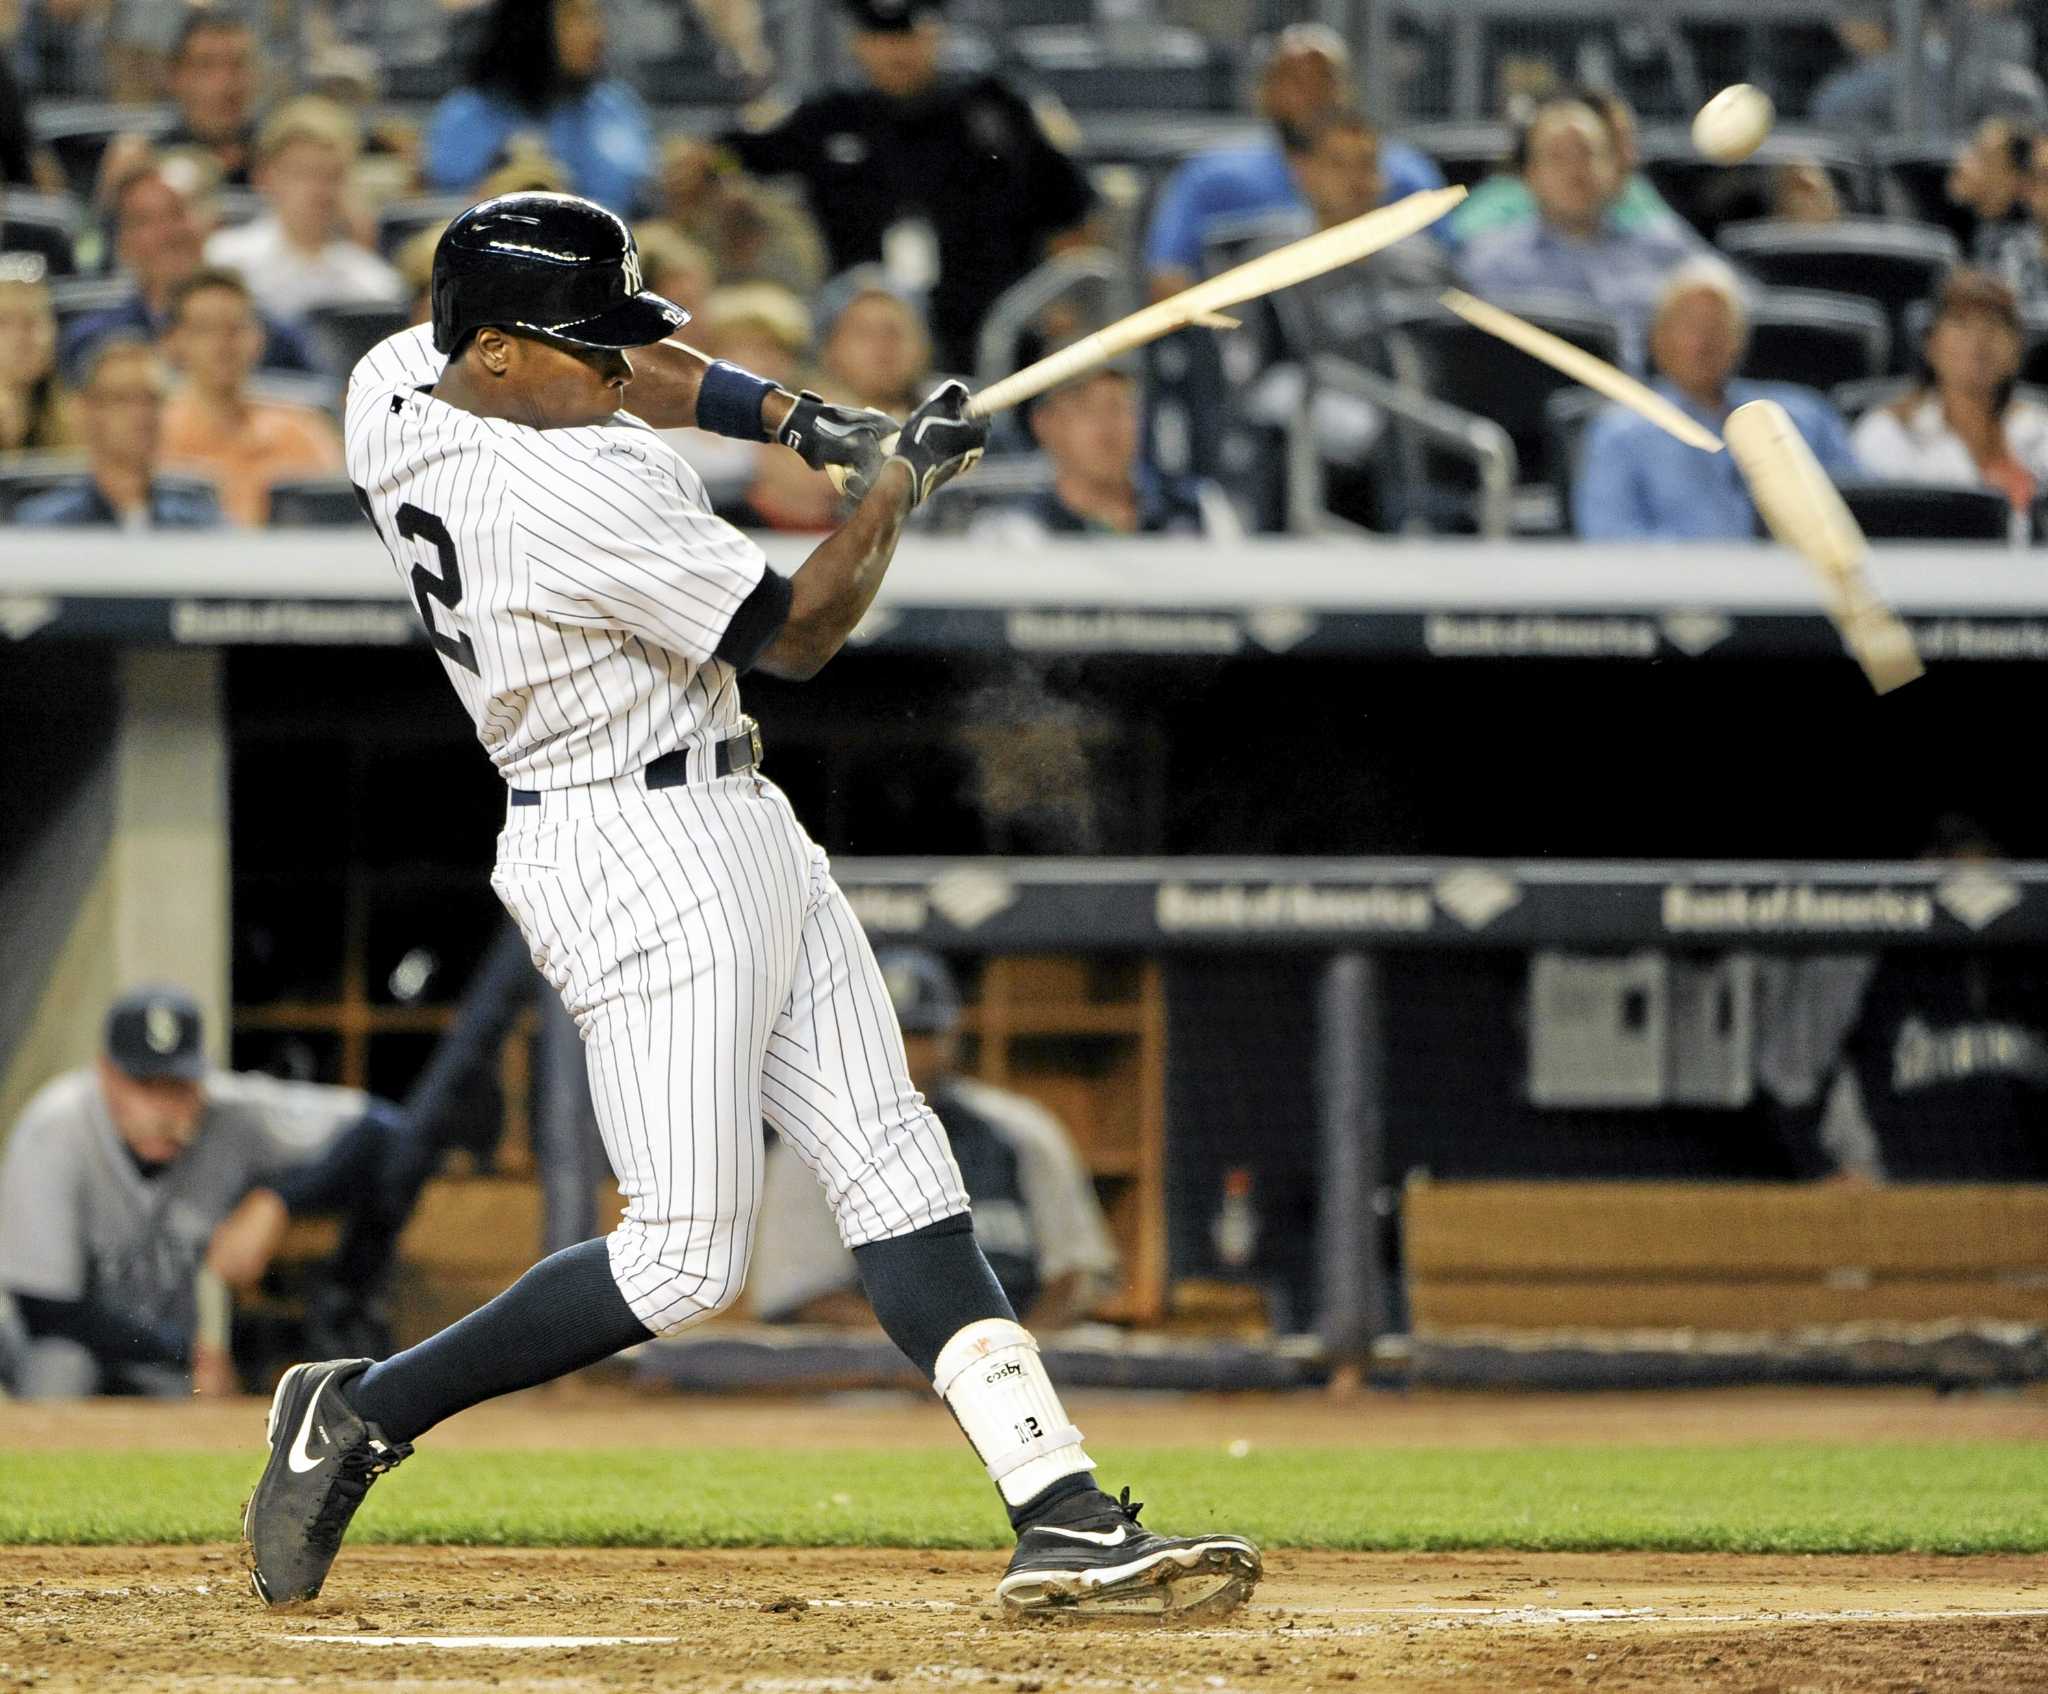 Yankees designate Alfonso Soriano for assignment - The Boston Globe